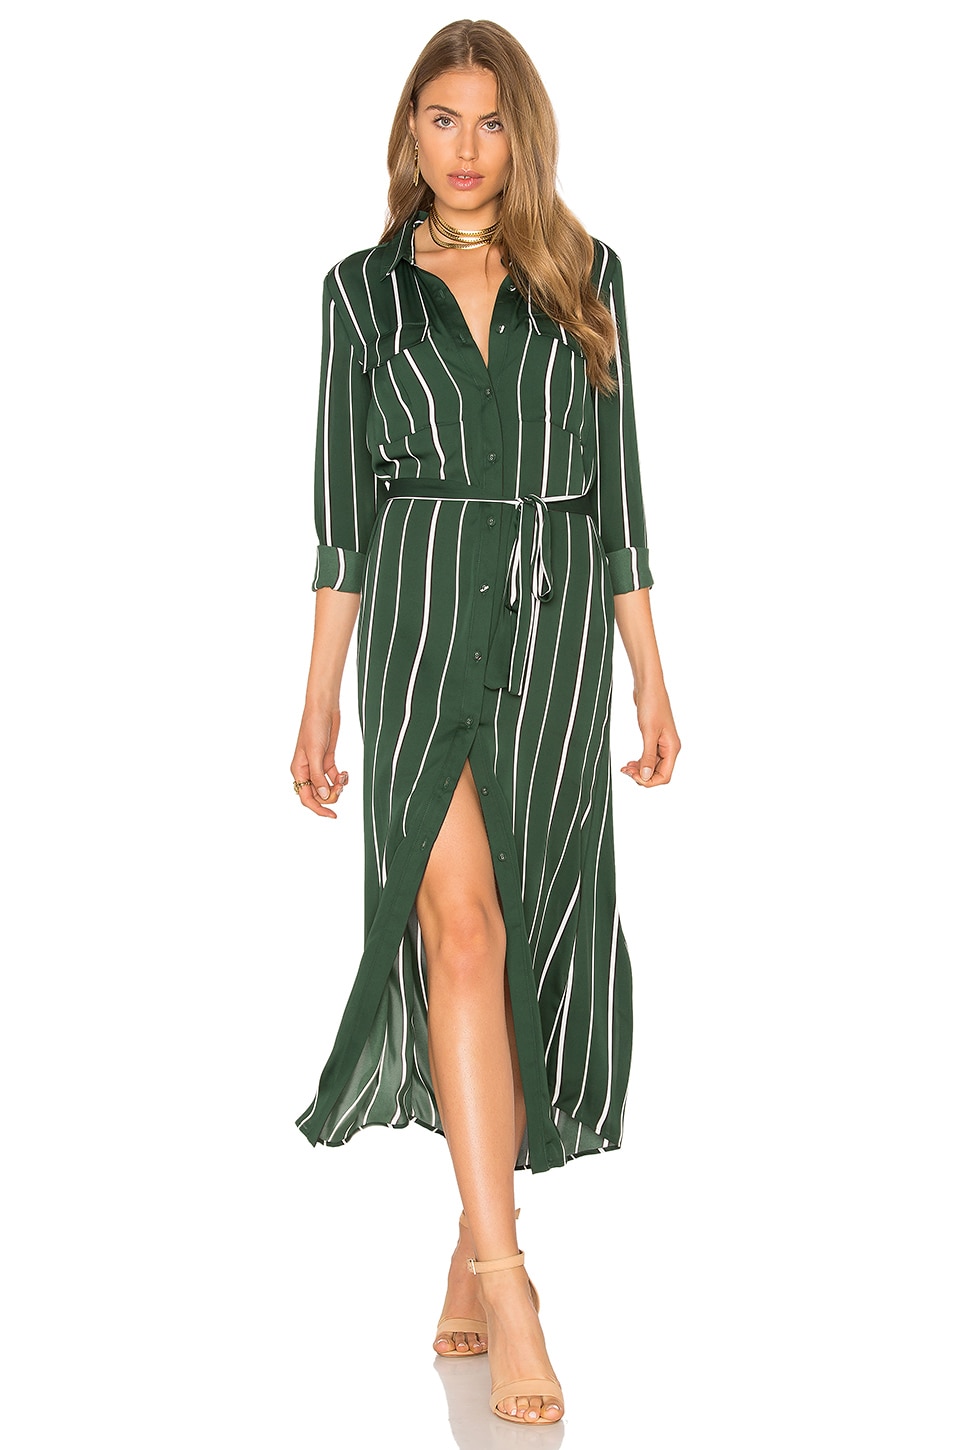 L'Academie The Long Sleeve Shirt Dress in Green Stripe | REVOLVE